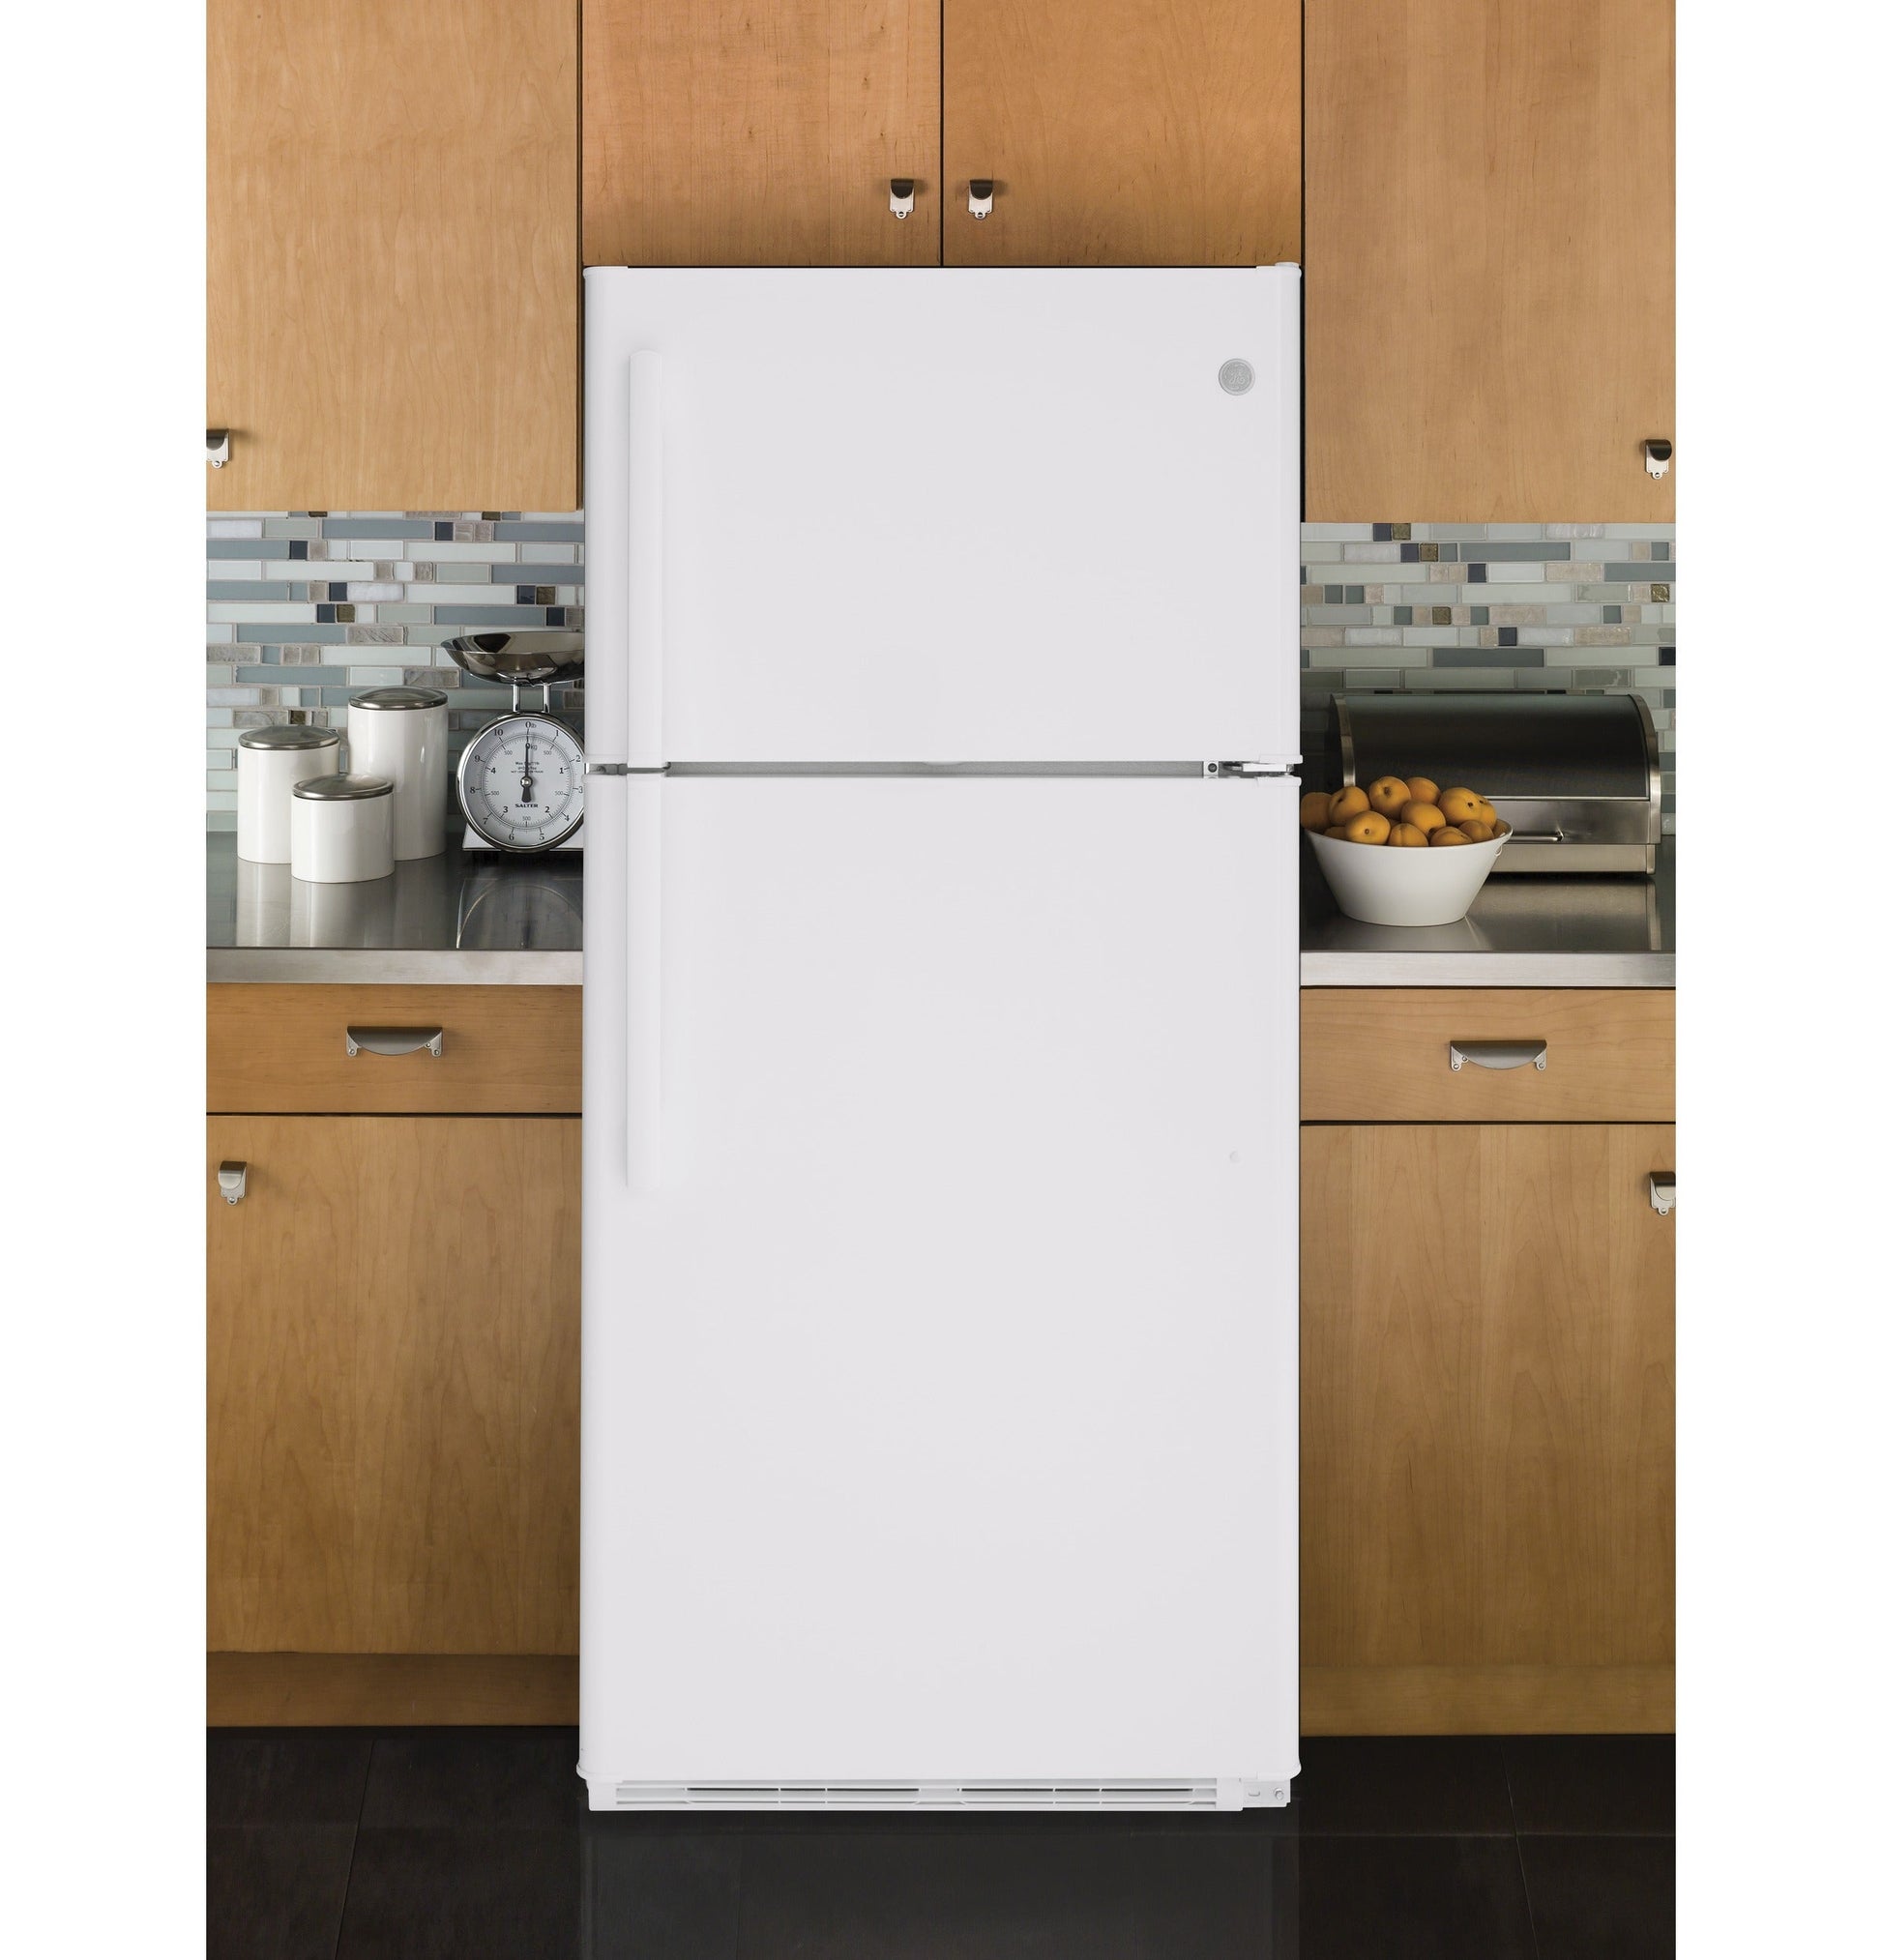 GE® Energy Star 18 Cu. Ft. Top-Freezer Refrigerator White - GTE18FTLKWW